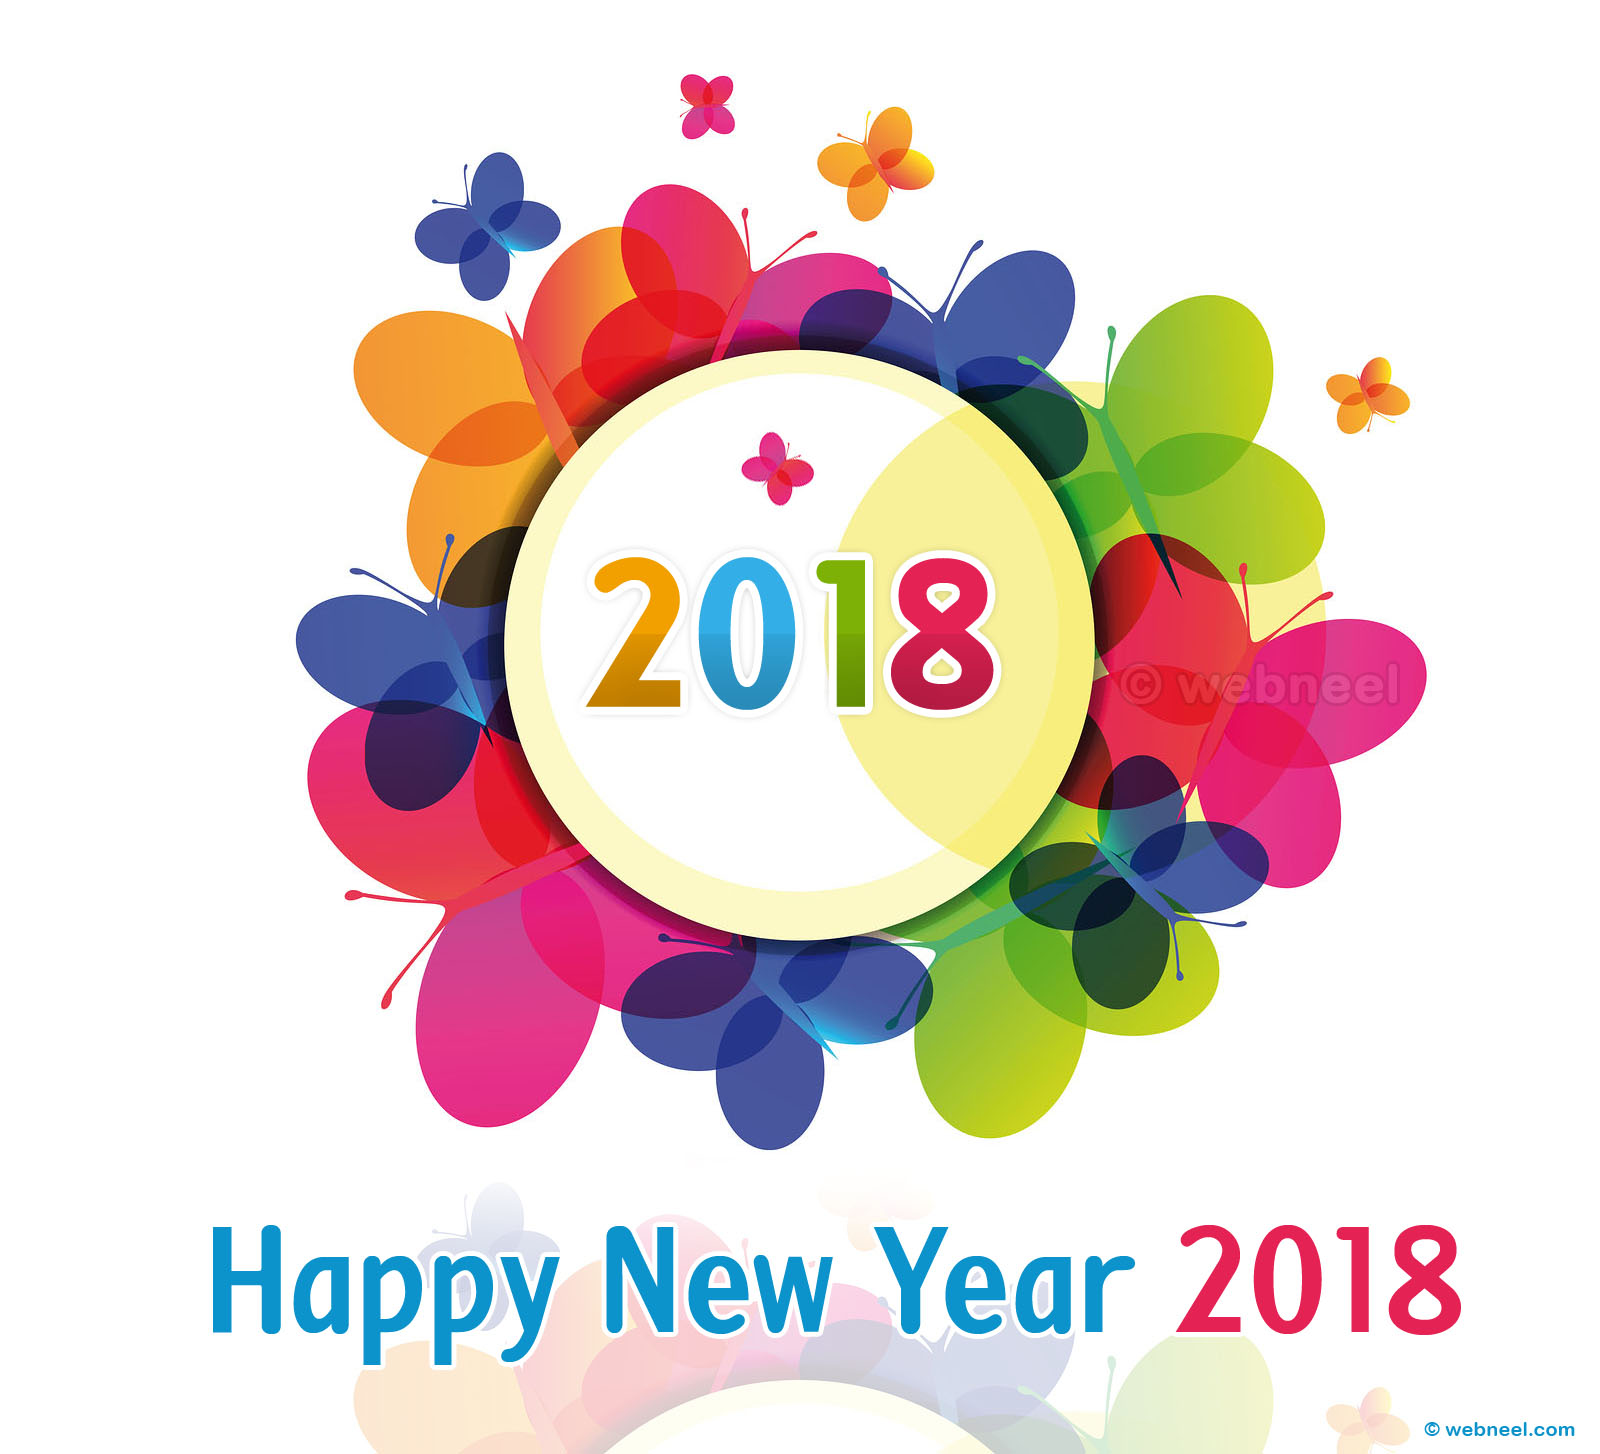 4 new year greetings